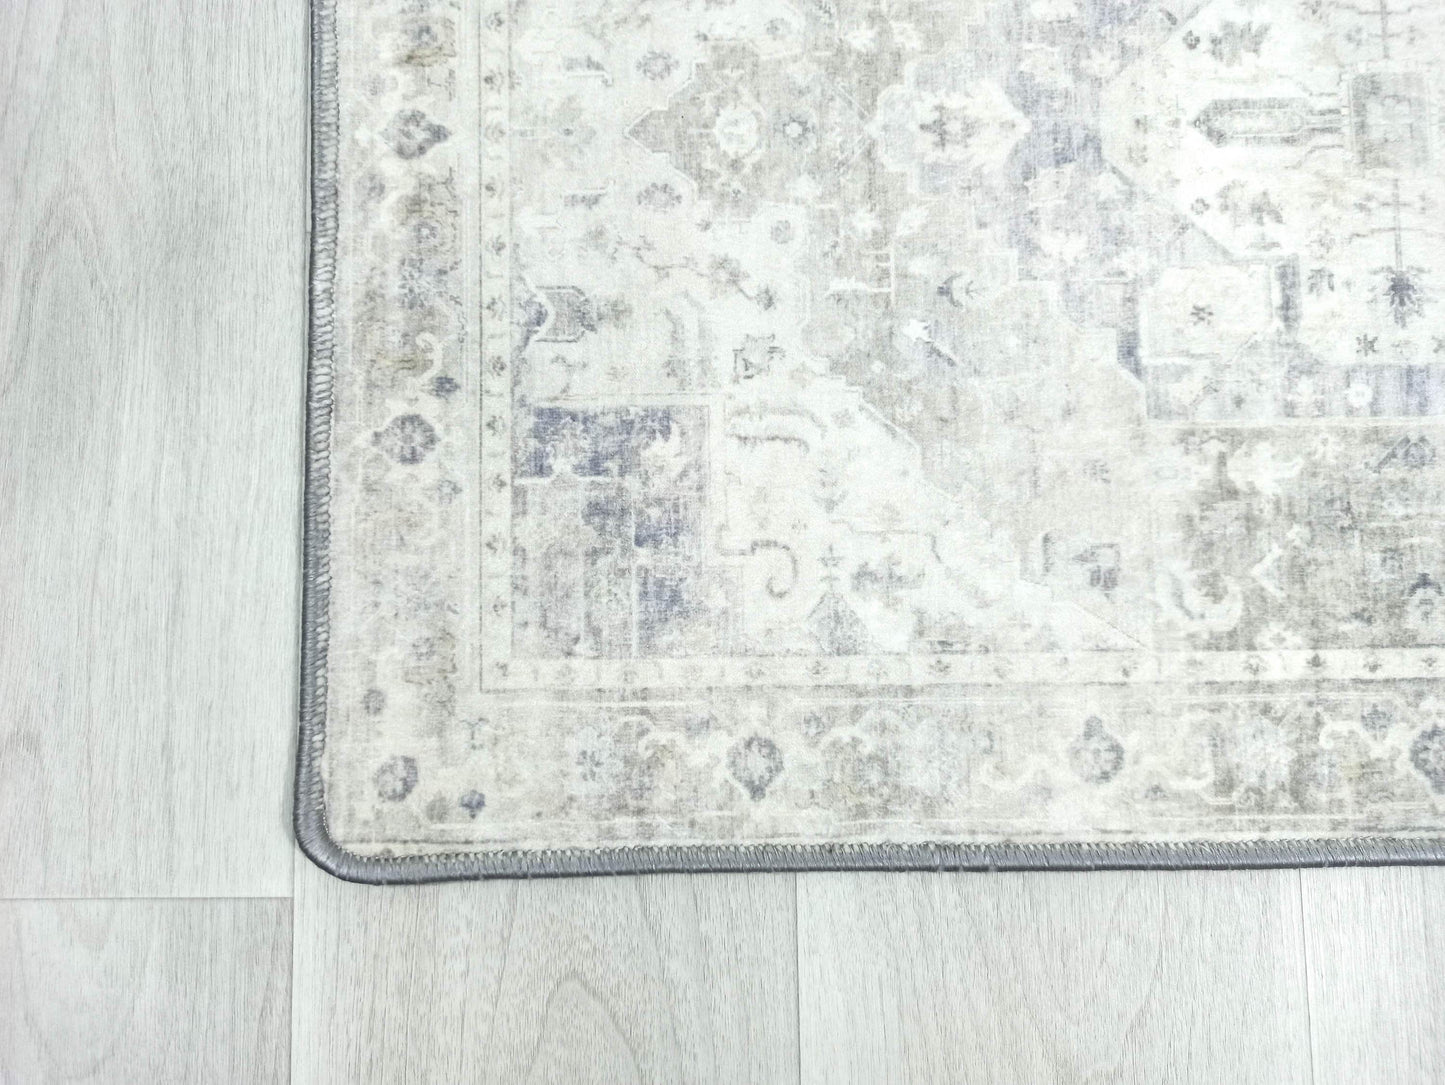 2x3 Persian Rug, Neutral Gray Heriz Vintage Faded Grey Entryway Door Floor Mat Anti-slip Non slip Bath Bathroom Kitchen Doormat Rugs Decor